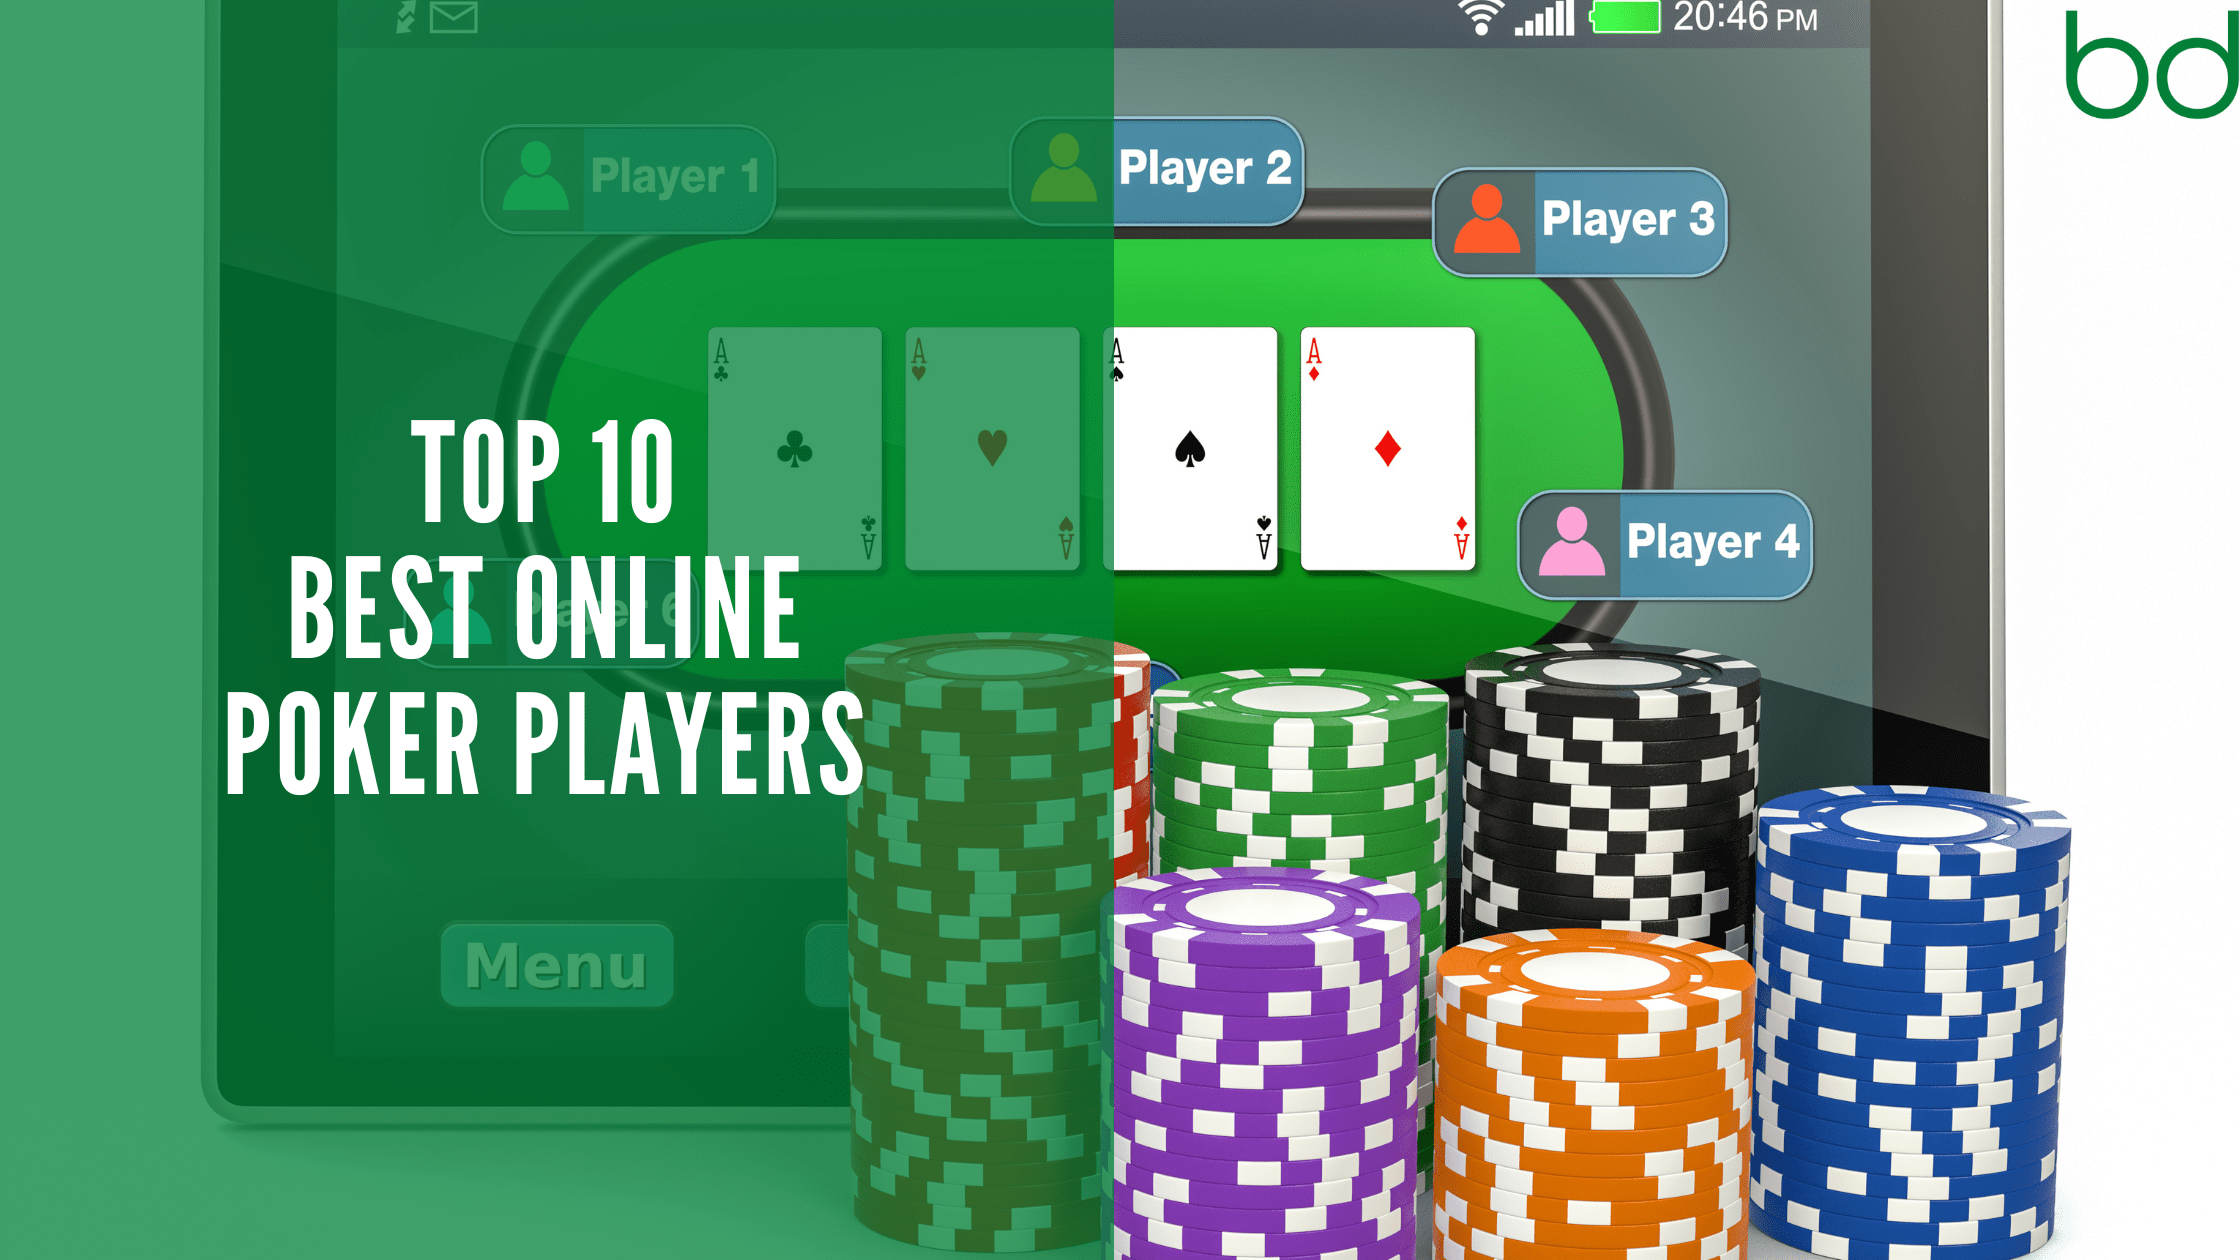 Top 10 Best Online Poker Players